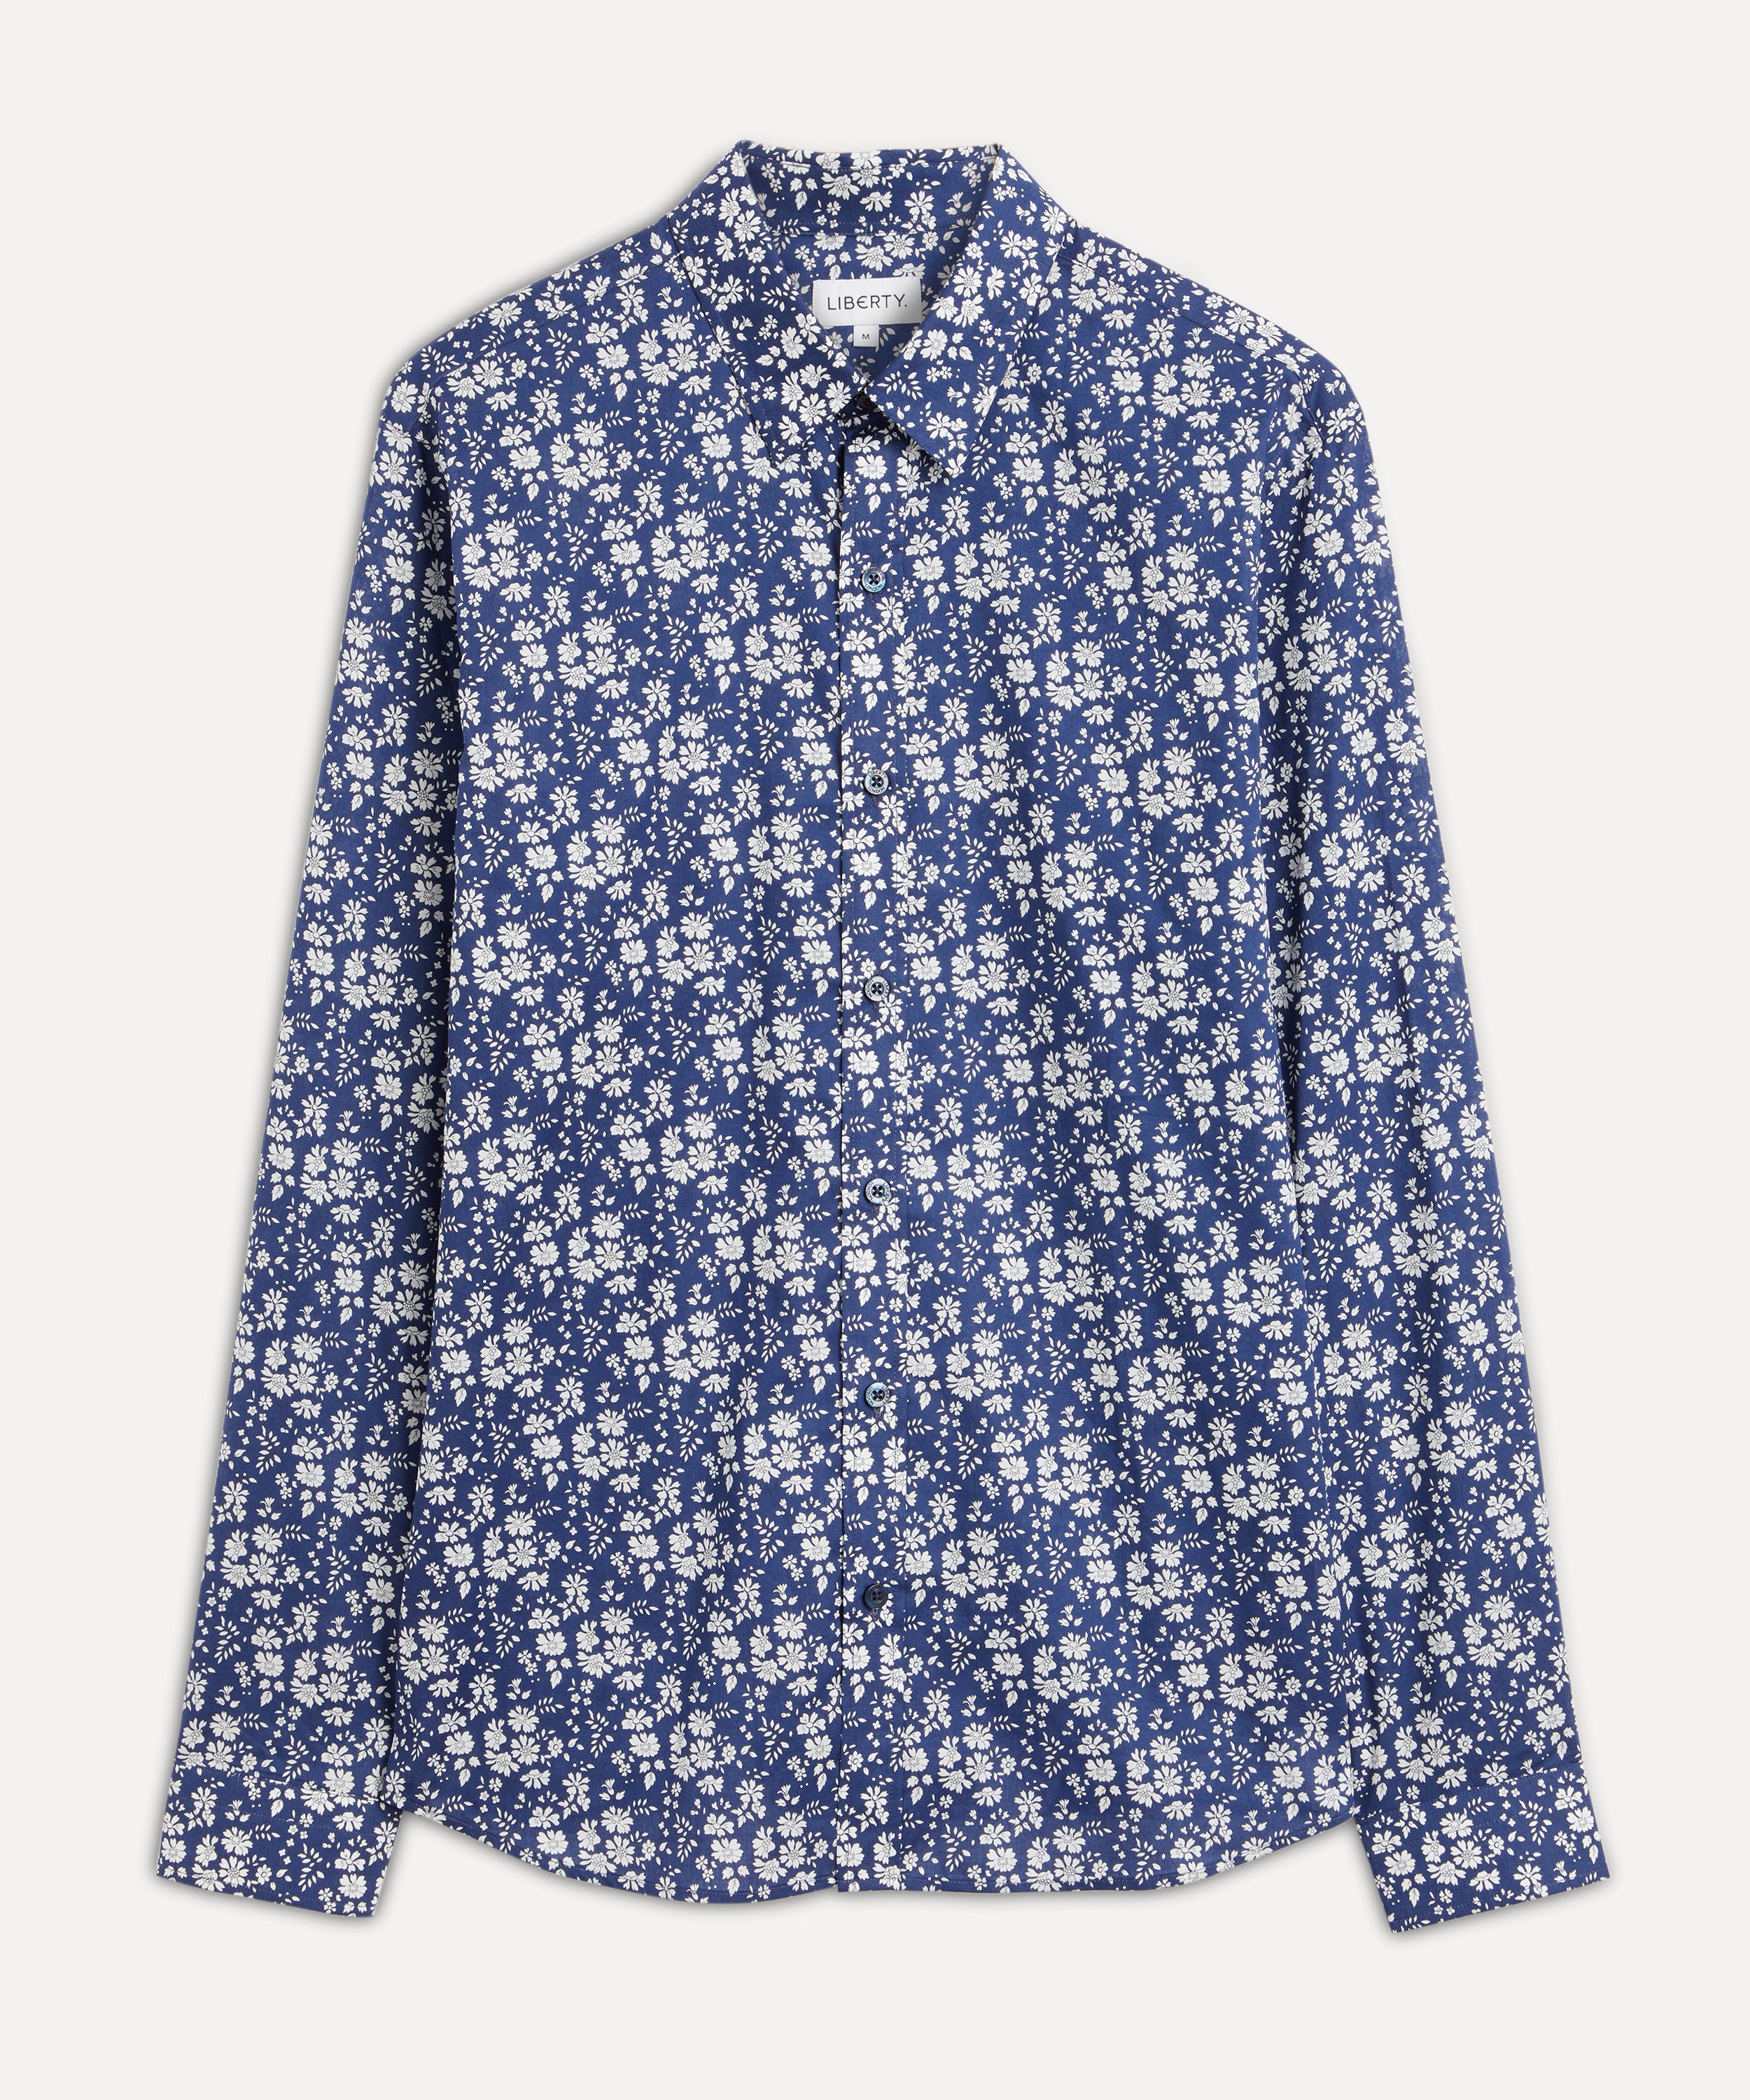 Liberty - Capel Lasenby Tana Lawn™ Cotton Casual Classic Shirt